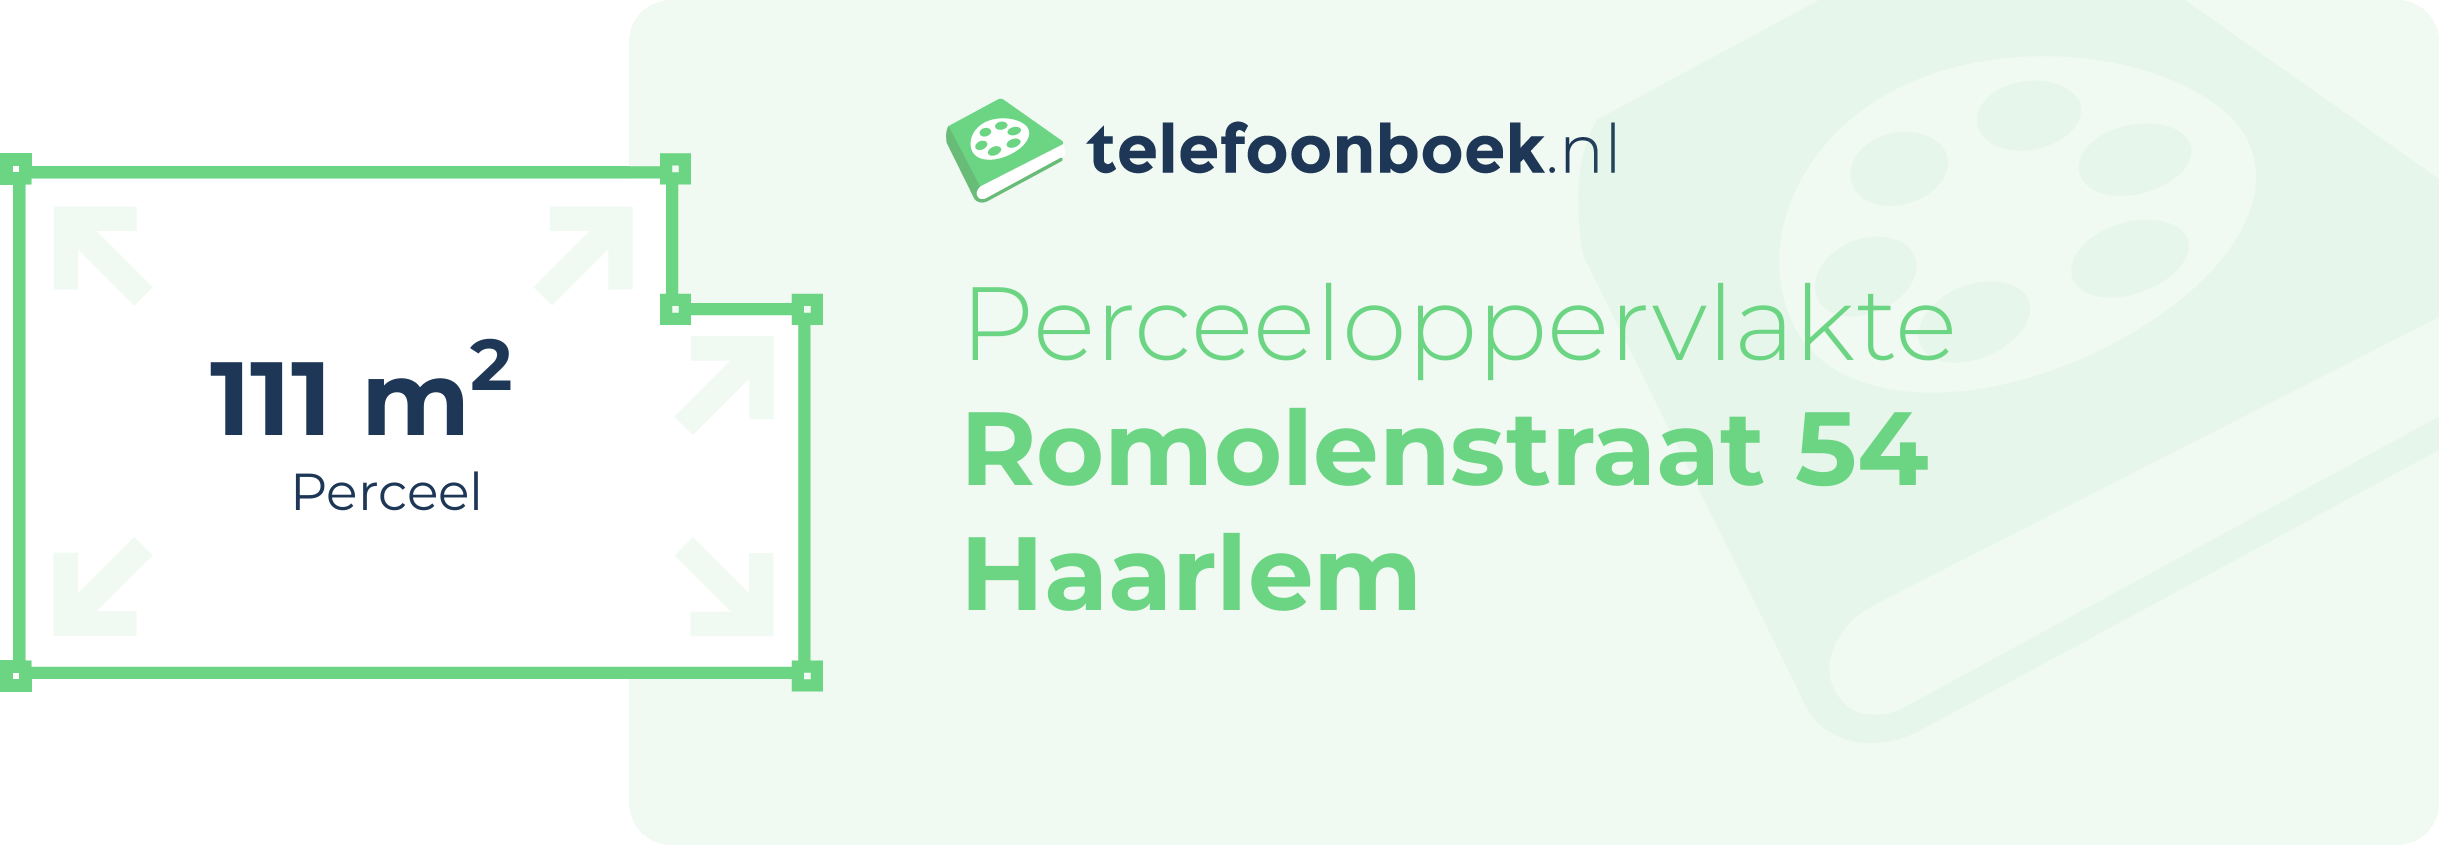 Perceeloppervlakte Romolenstraat 54 Haarlem